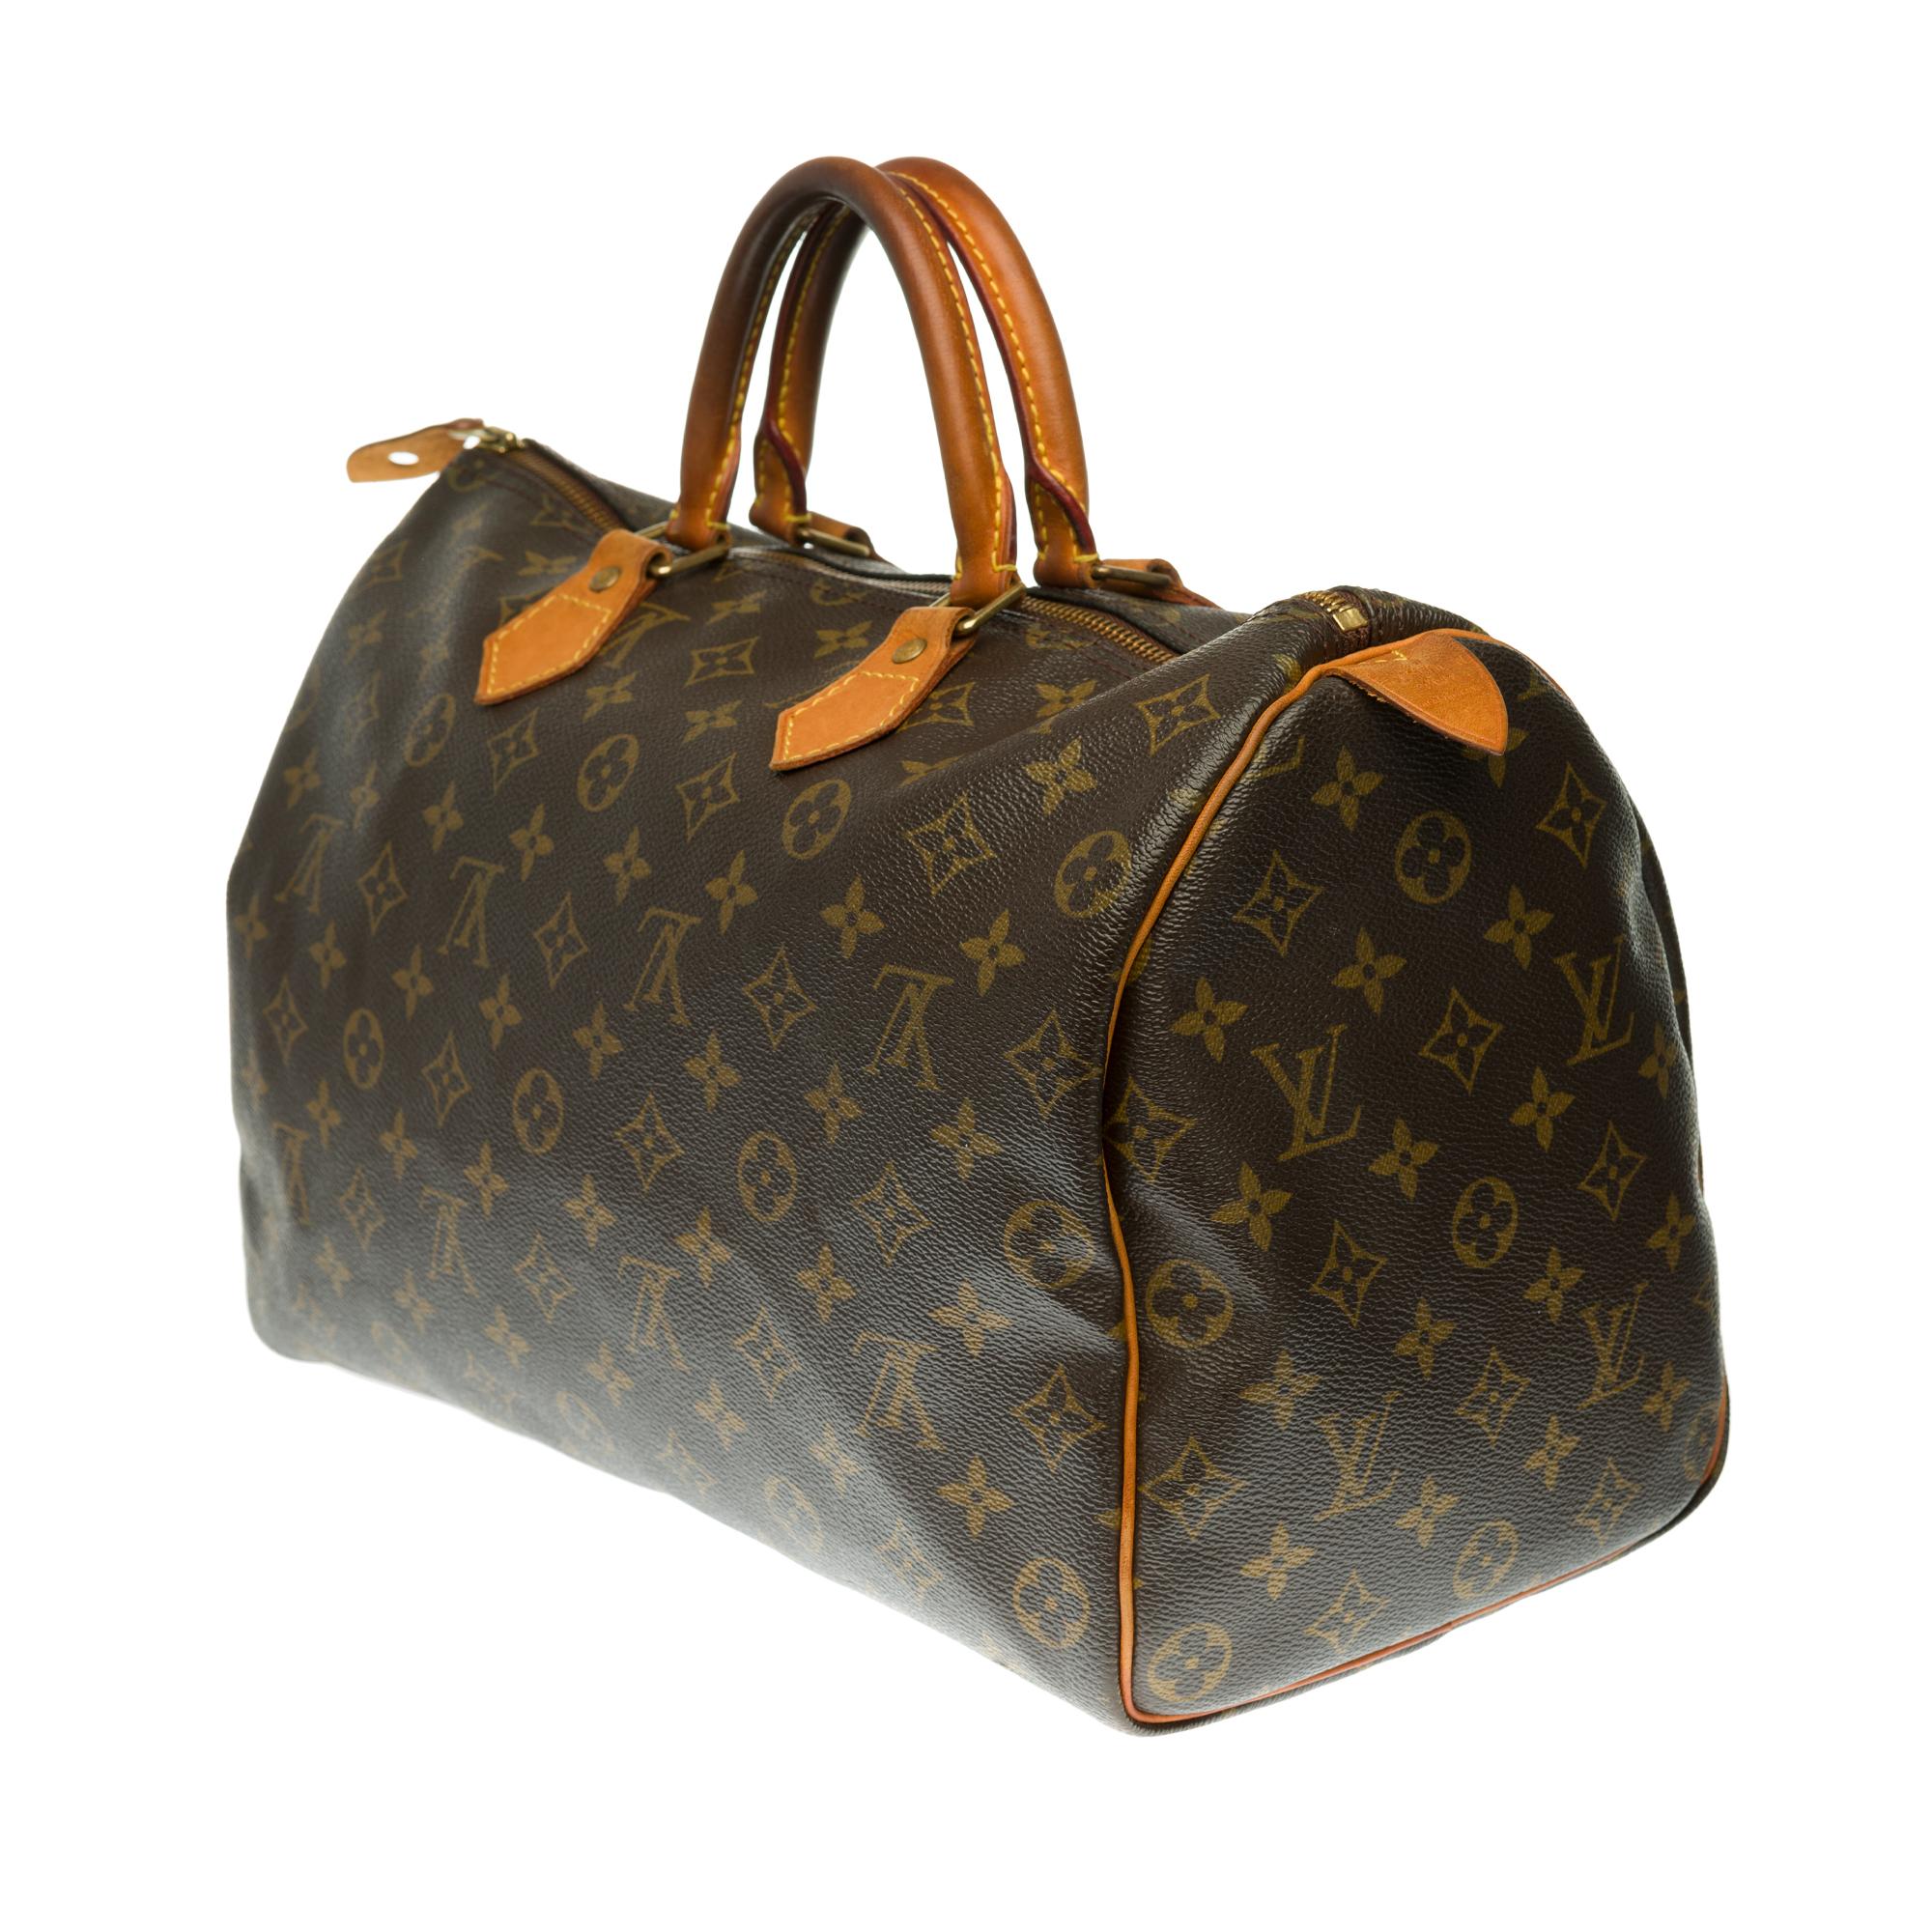 Customized Louis Vuitton Speedy 35 handbag in Monogram canvas In Good Condition In Paris, IDF